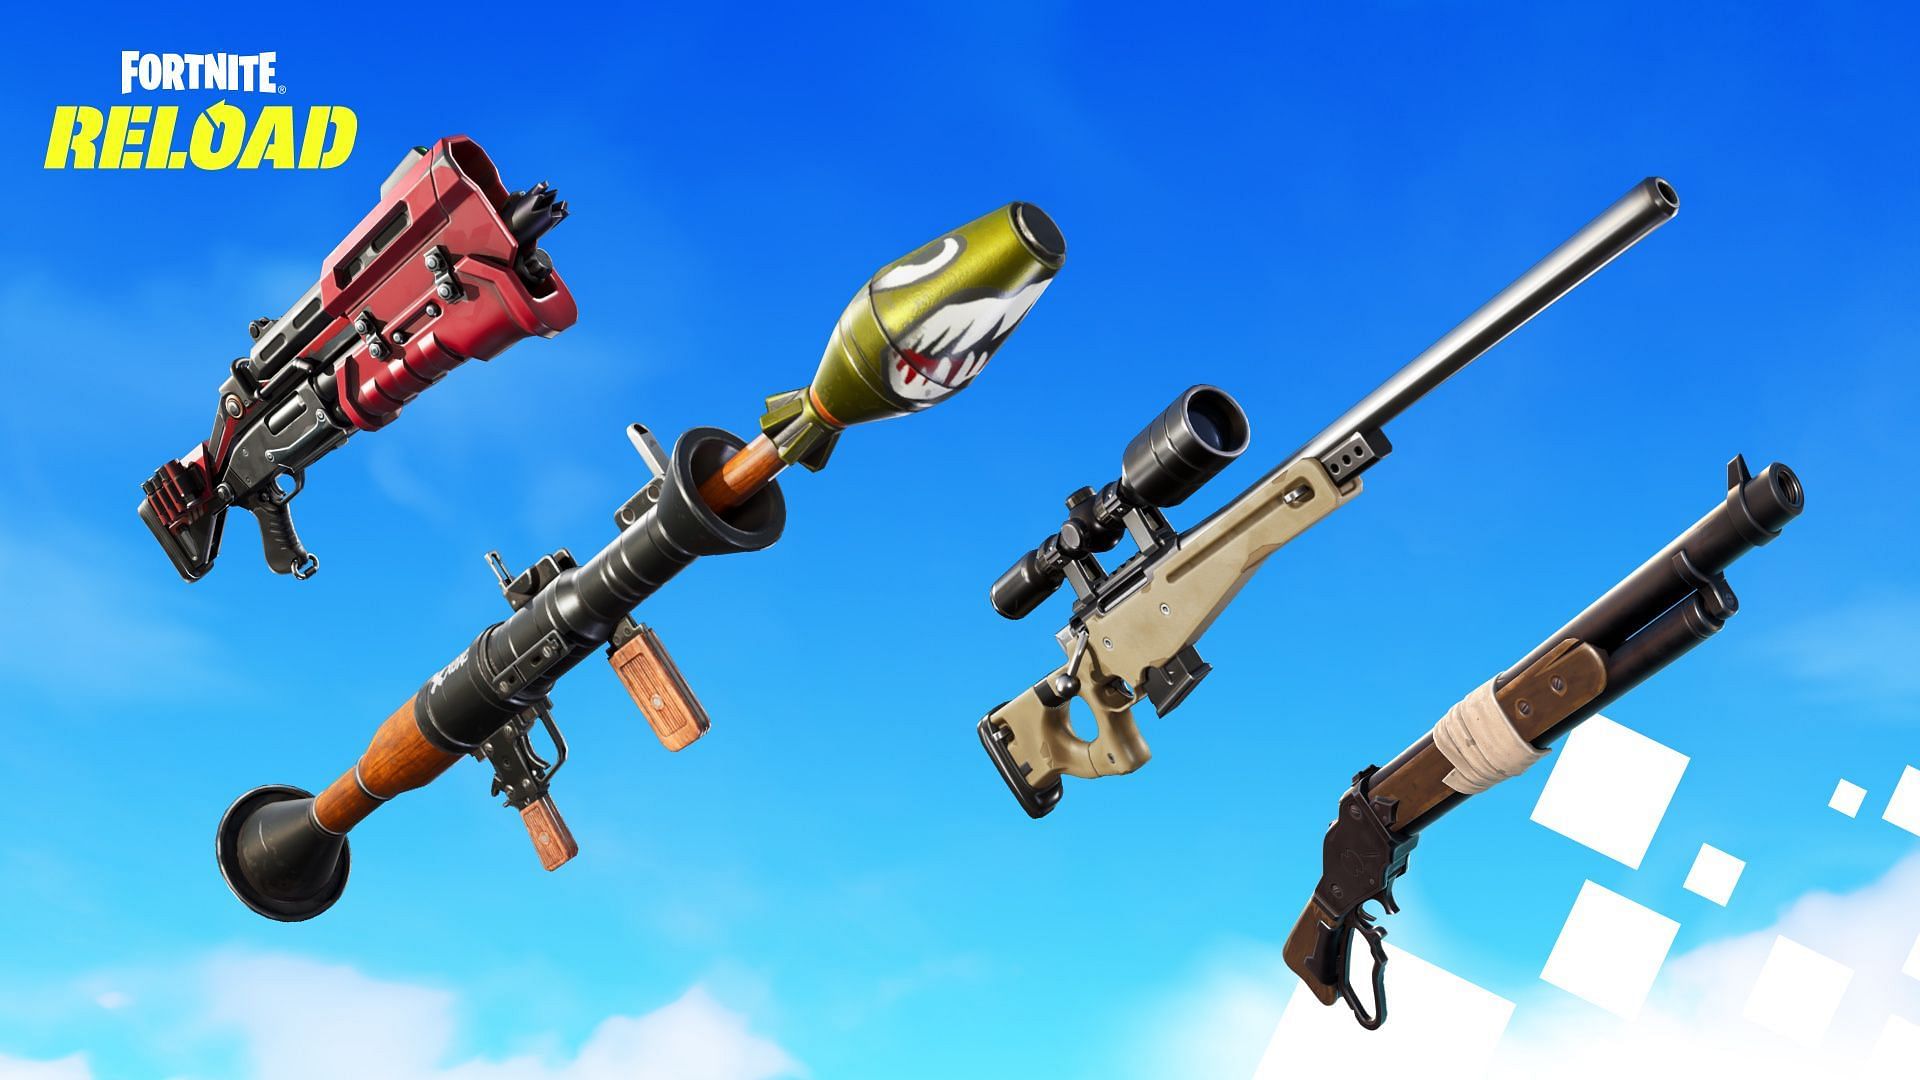 Fortnite Reload weapons (Image via Epic Games)